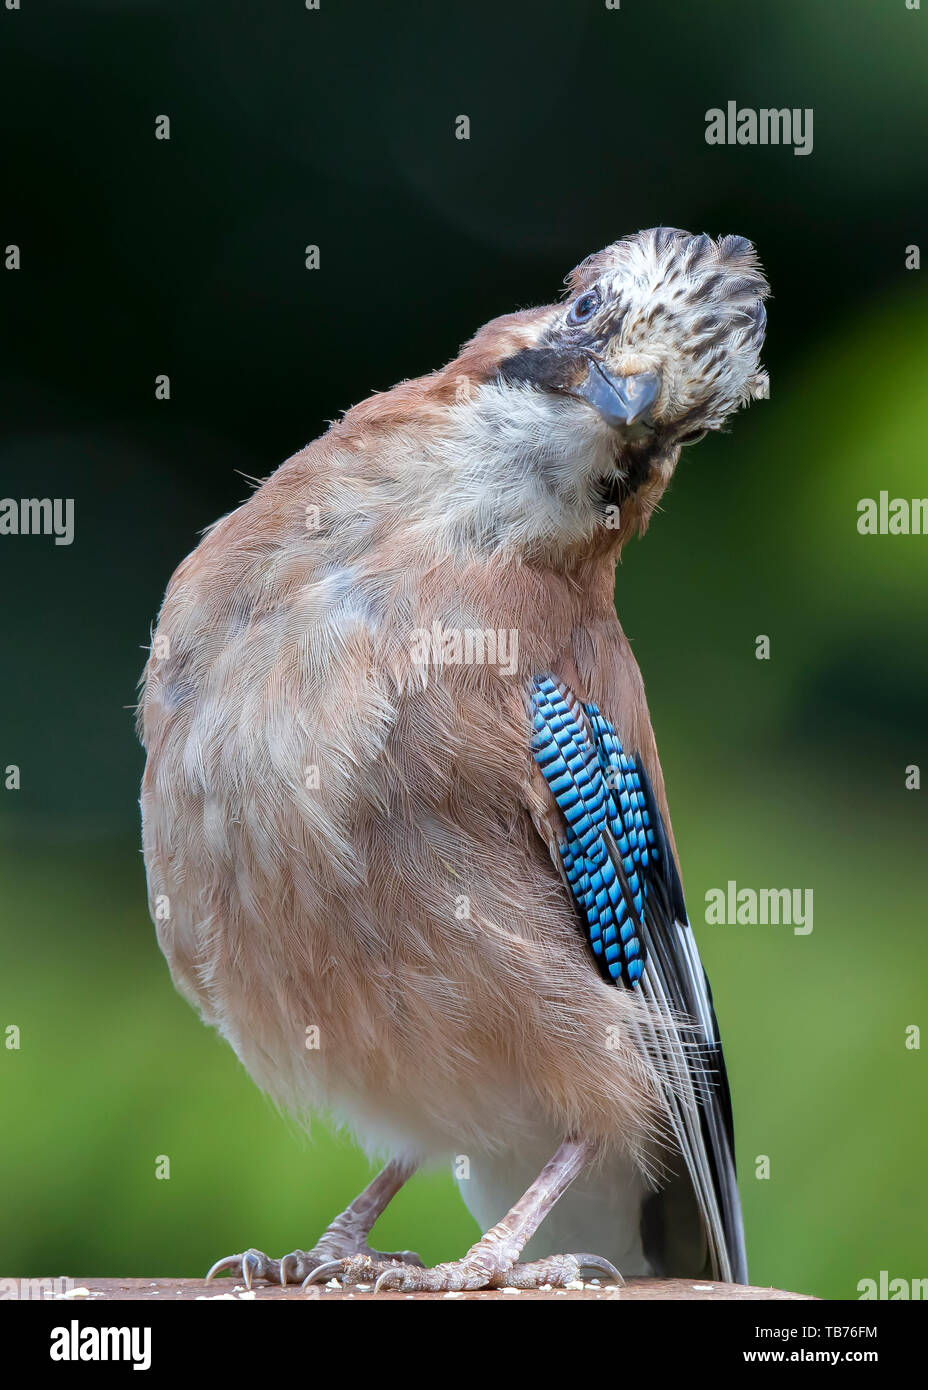 Detailed, portrait, close-up front view of wild, juvenile, British jay bird (Garrulus glandarius) isolated in natural UK outdoor habitat in funny pose. Stock Photo